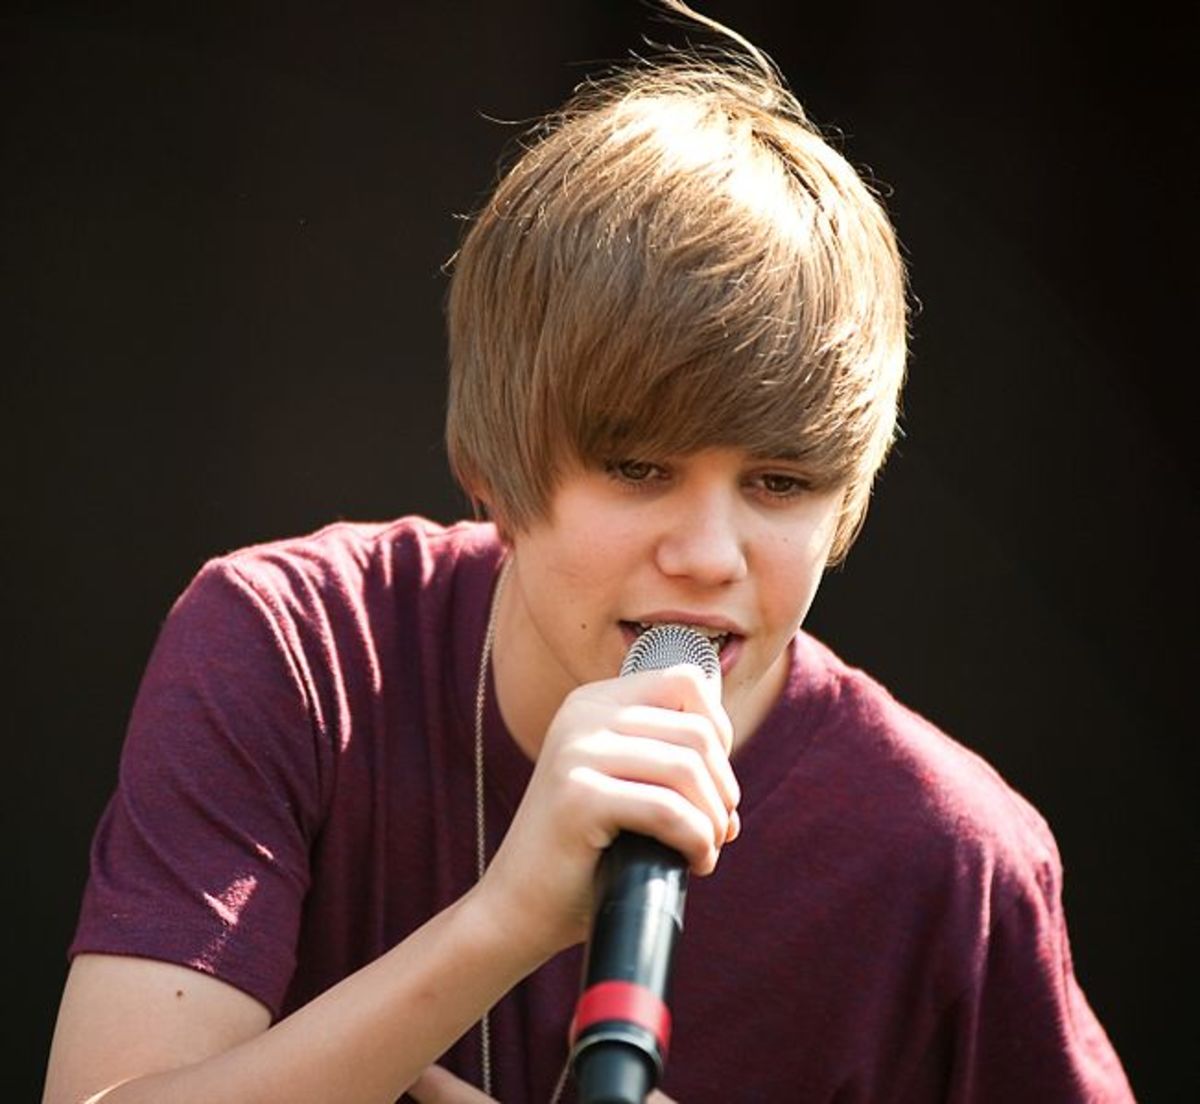 Justin Bieber in his favorite color - purple. 